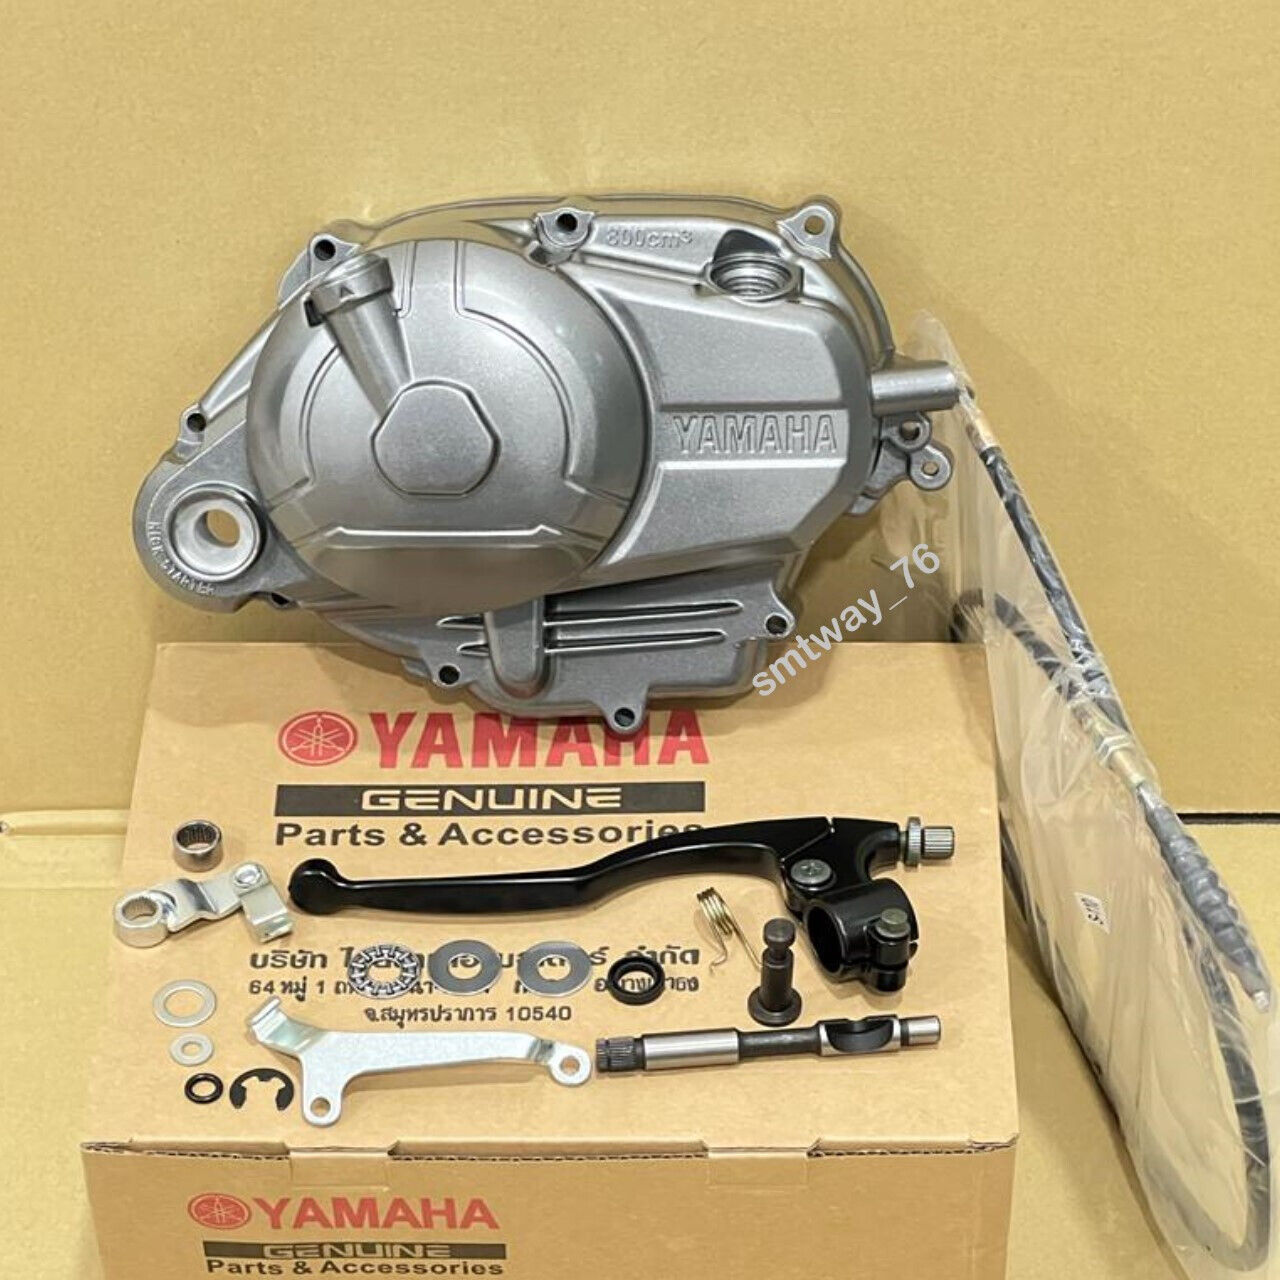 Yamaha OEM TTR110 TTR 110 Manual Clutch Kit High Performance Part DHL EXPRESS - $128.90